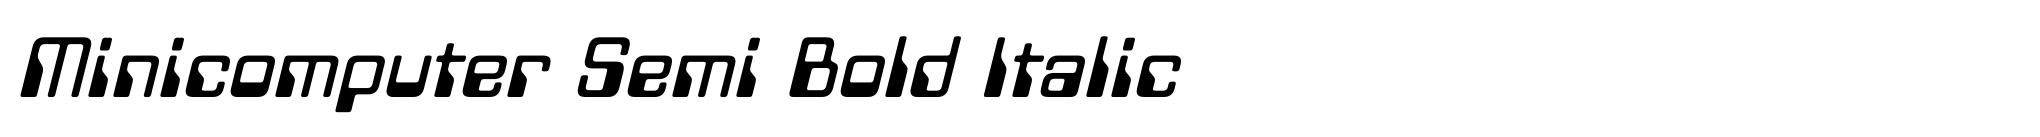 Minicomputer Semi Bold Italic image